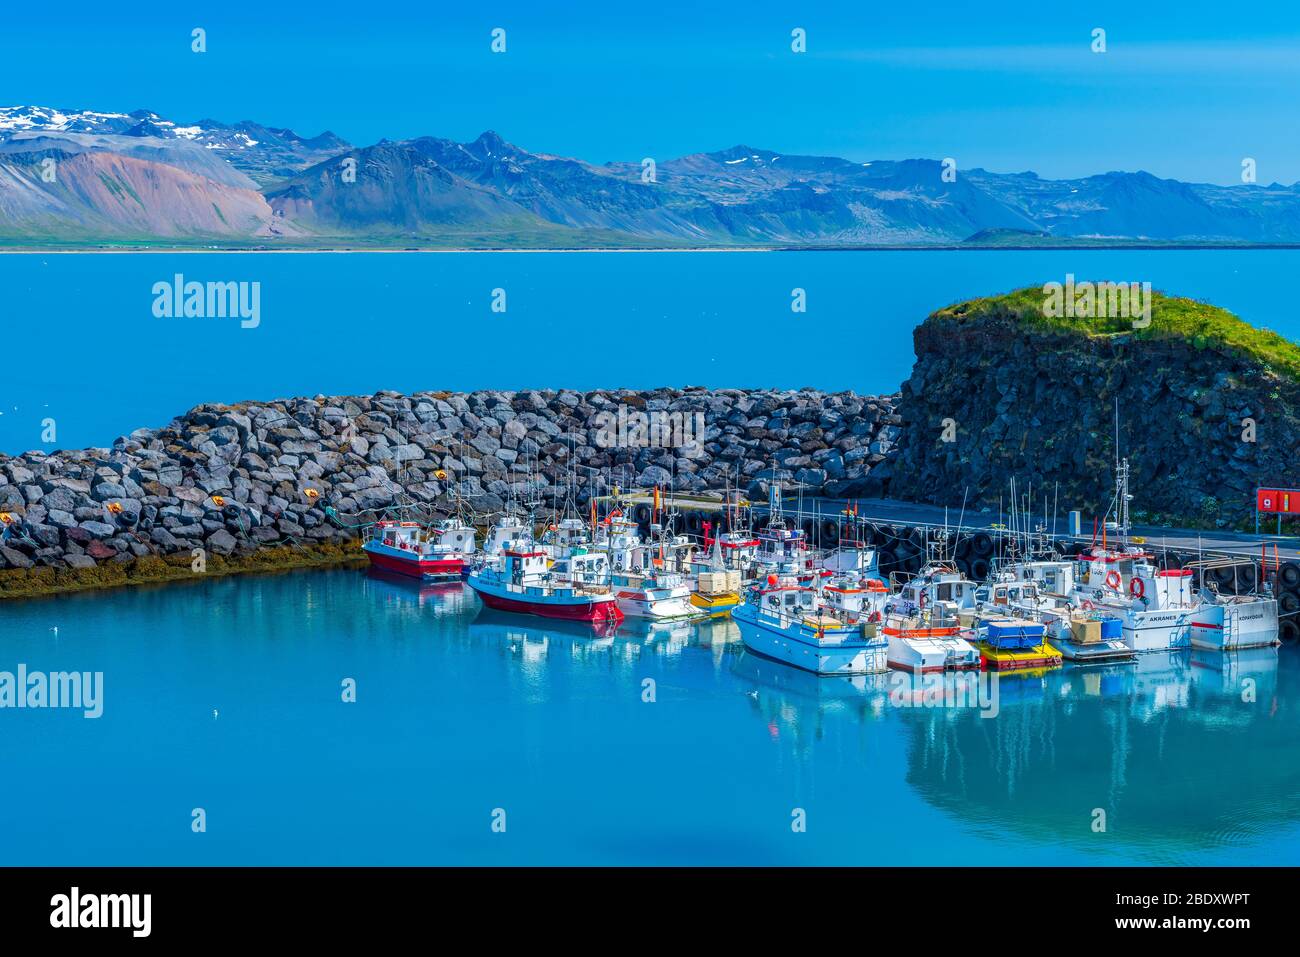 Port Arnarstapi, Arnarstapi, péninsule de Snaefellsnes, Islande Photo Stock  - Alamy